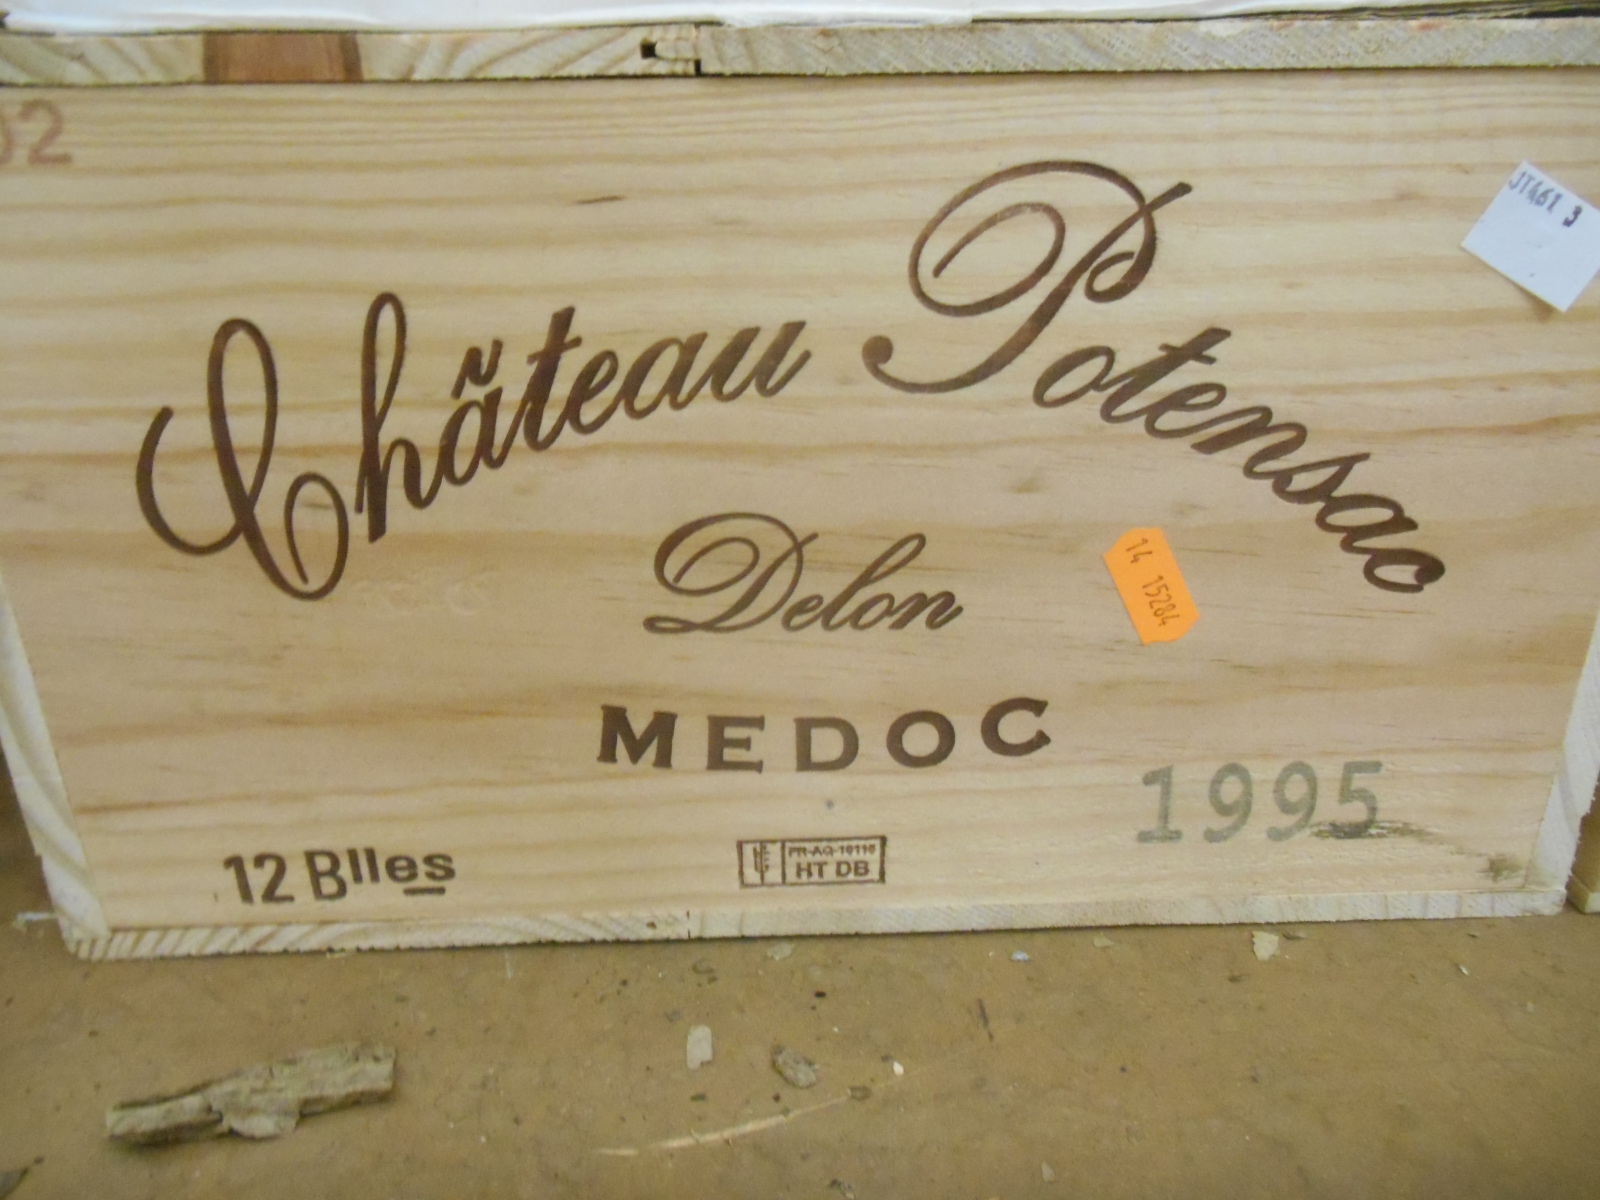 Chateau Potensac, Medoc 1995, twelve bottles in owc